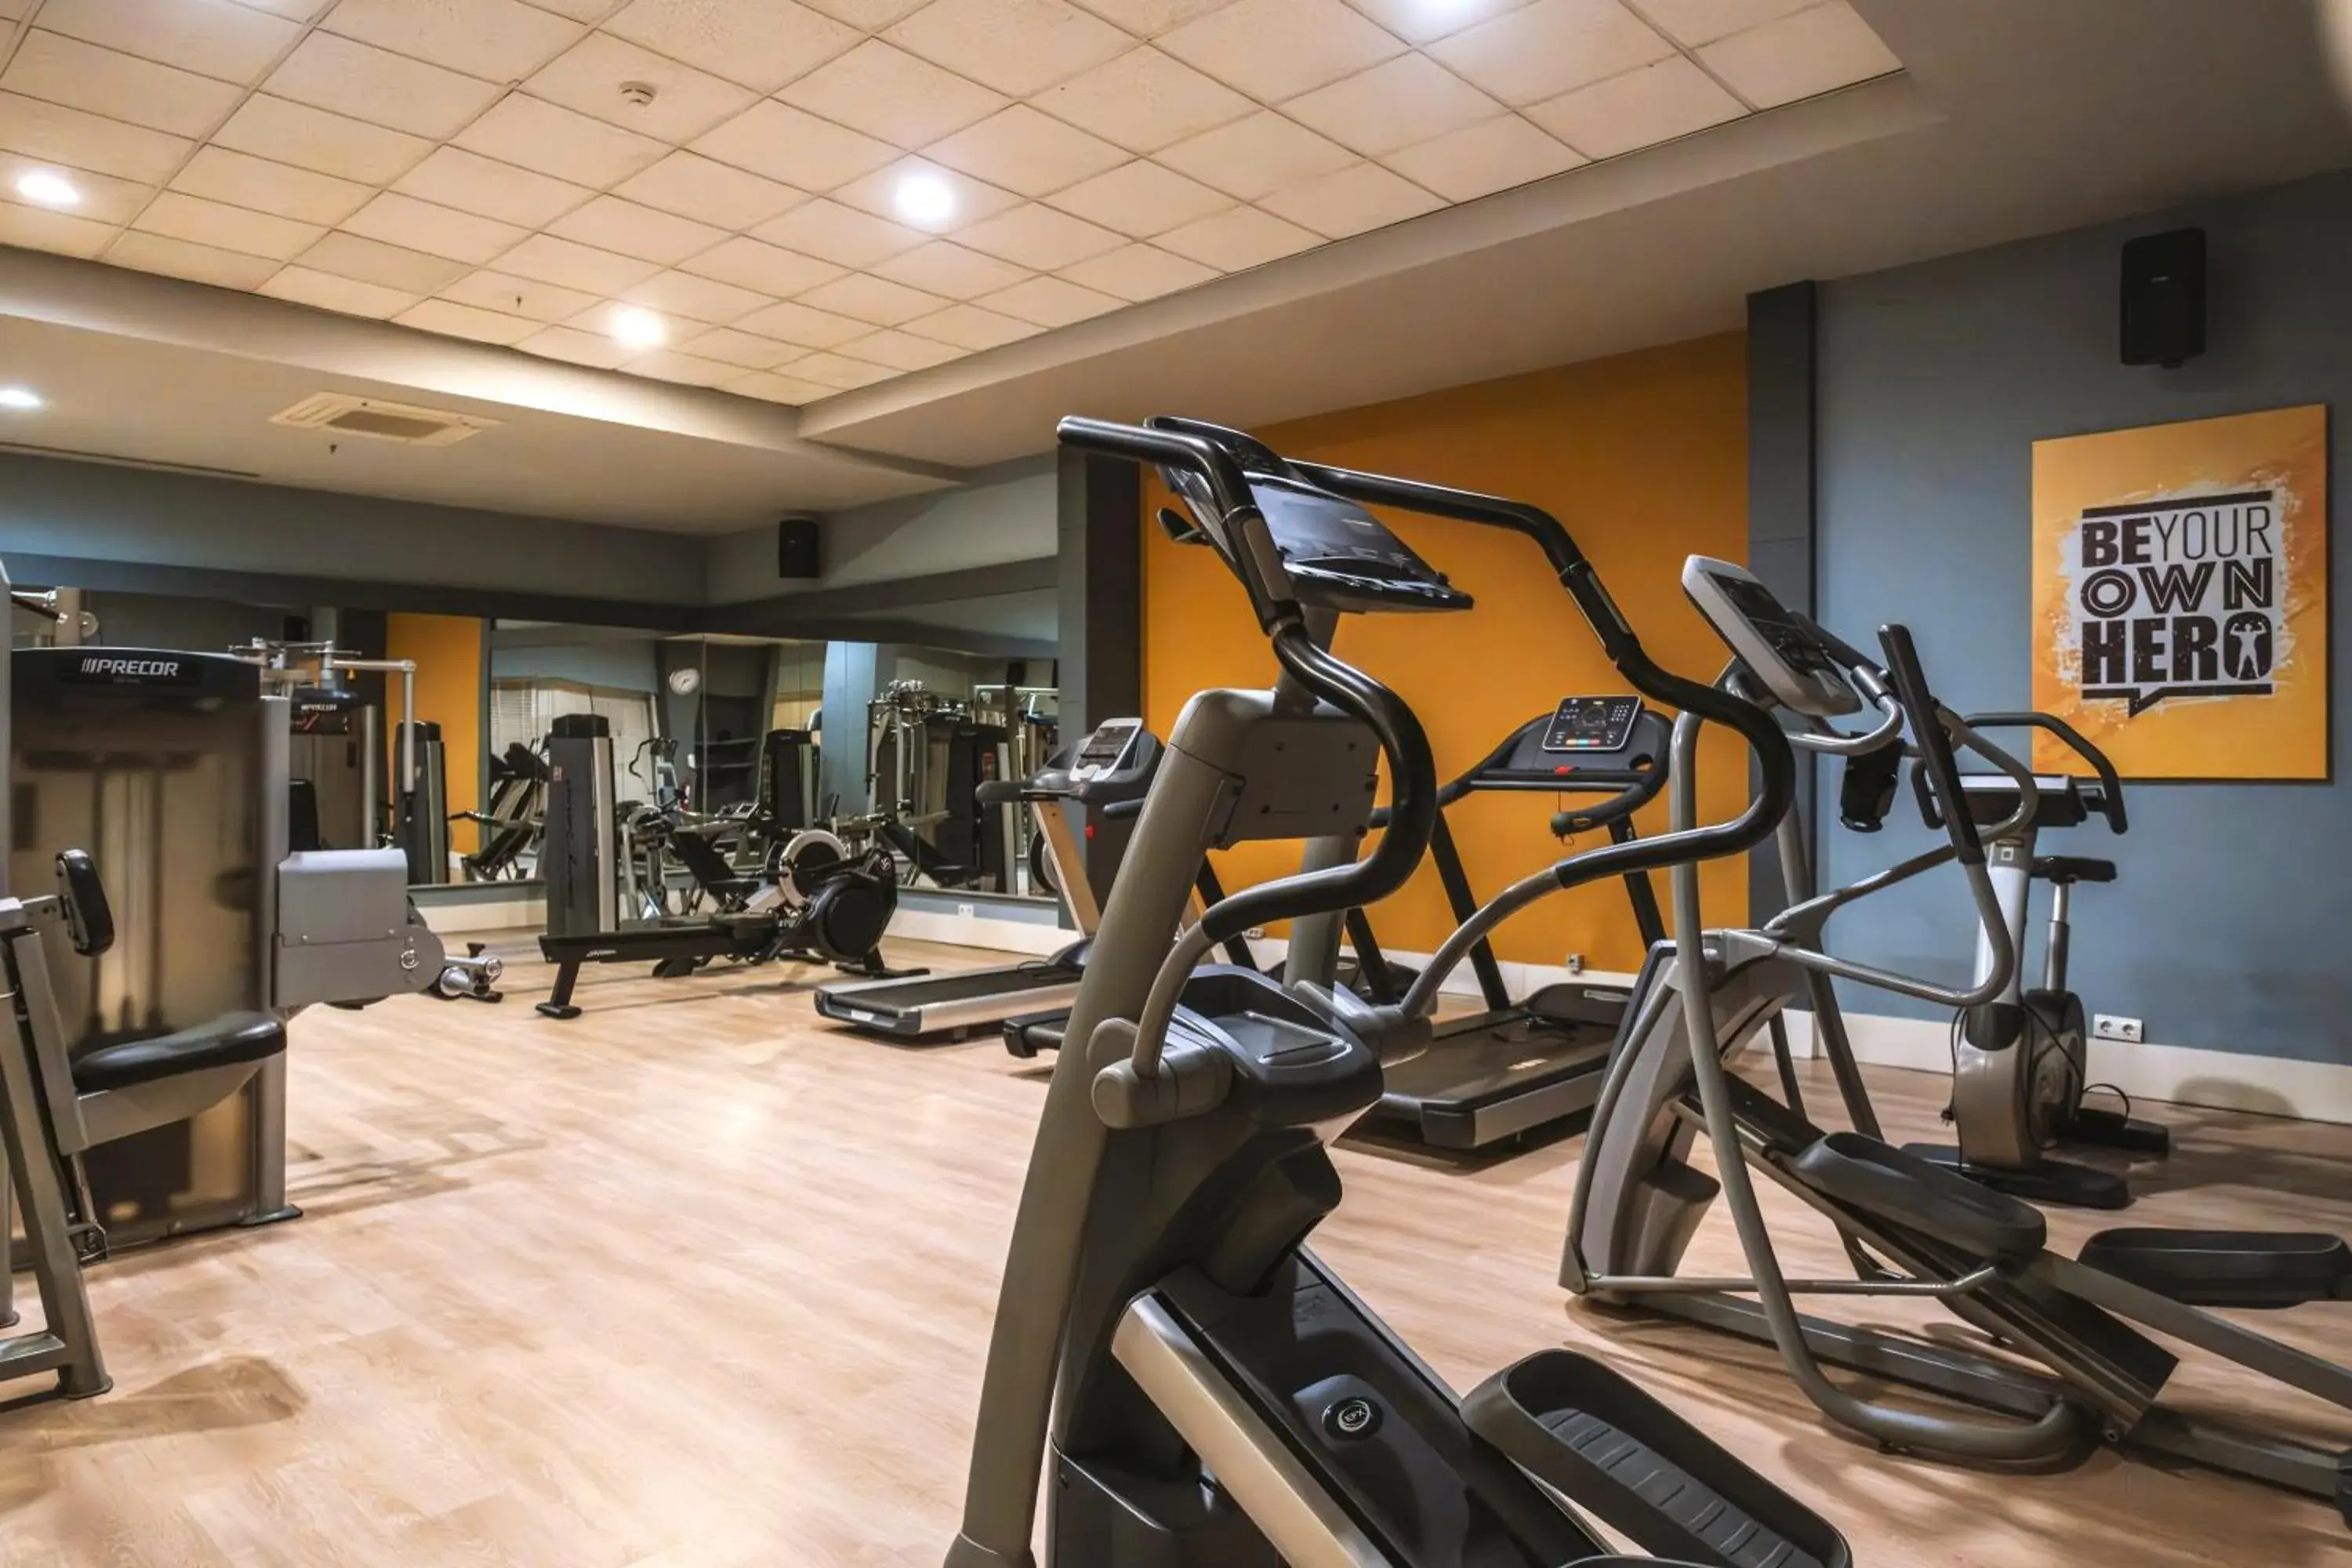 Fitness centre/facilities, Fitness Center/Facilities in Barut GOIA